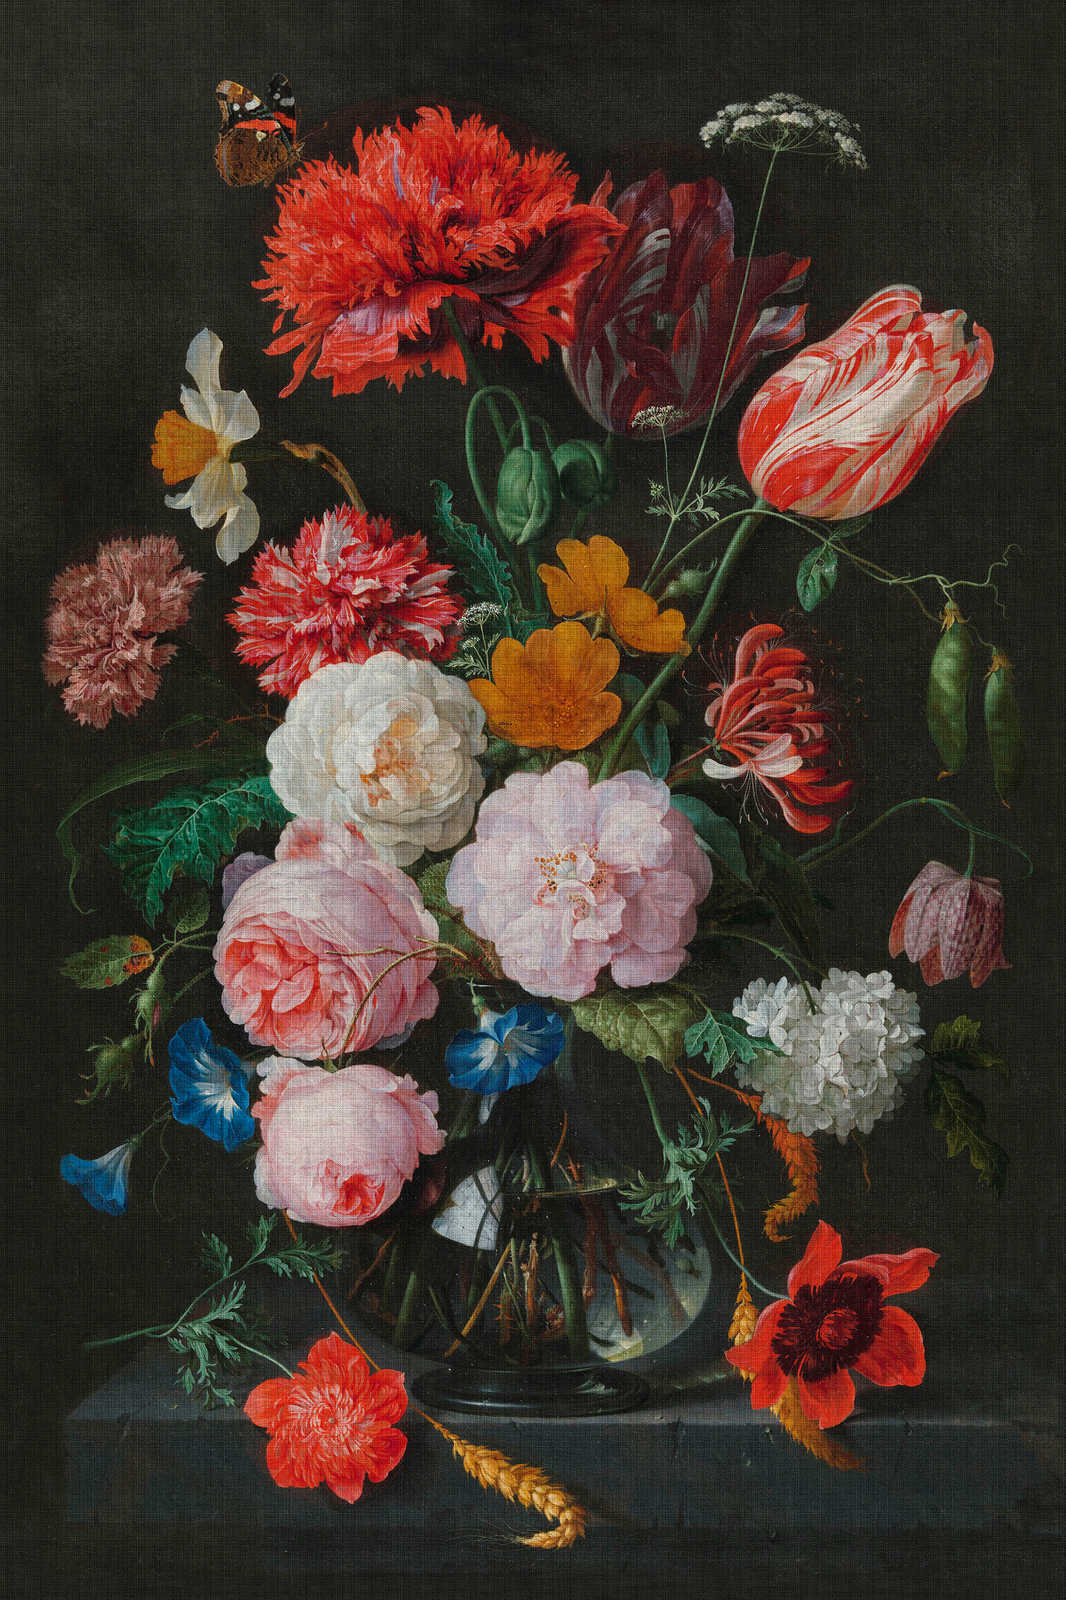             Artists Studio 4 - Toile Fleurs Naturel morte avec roses - 0,80 m x 1,20 m
        